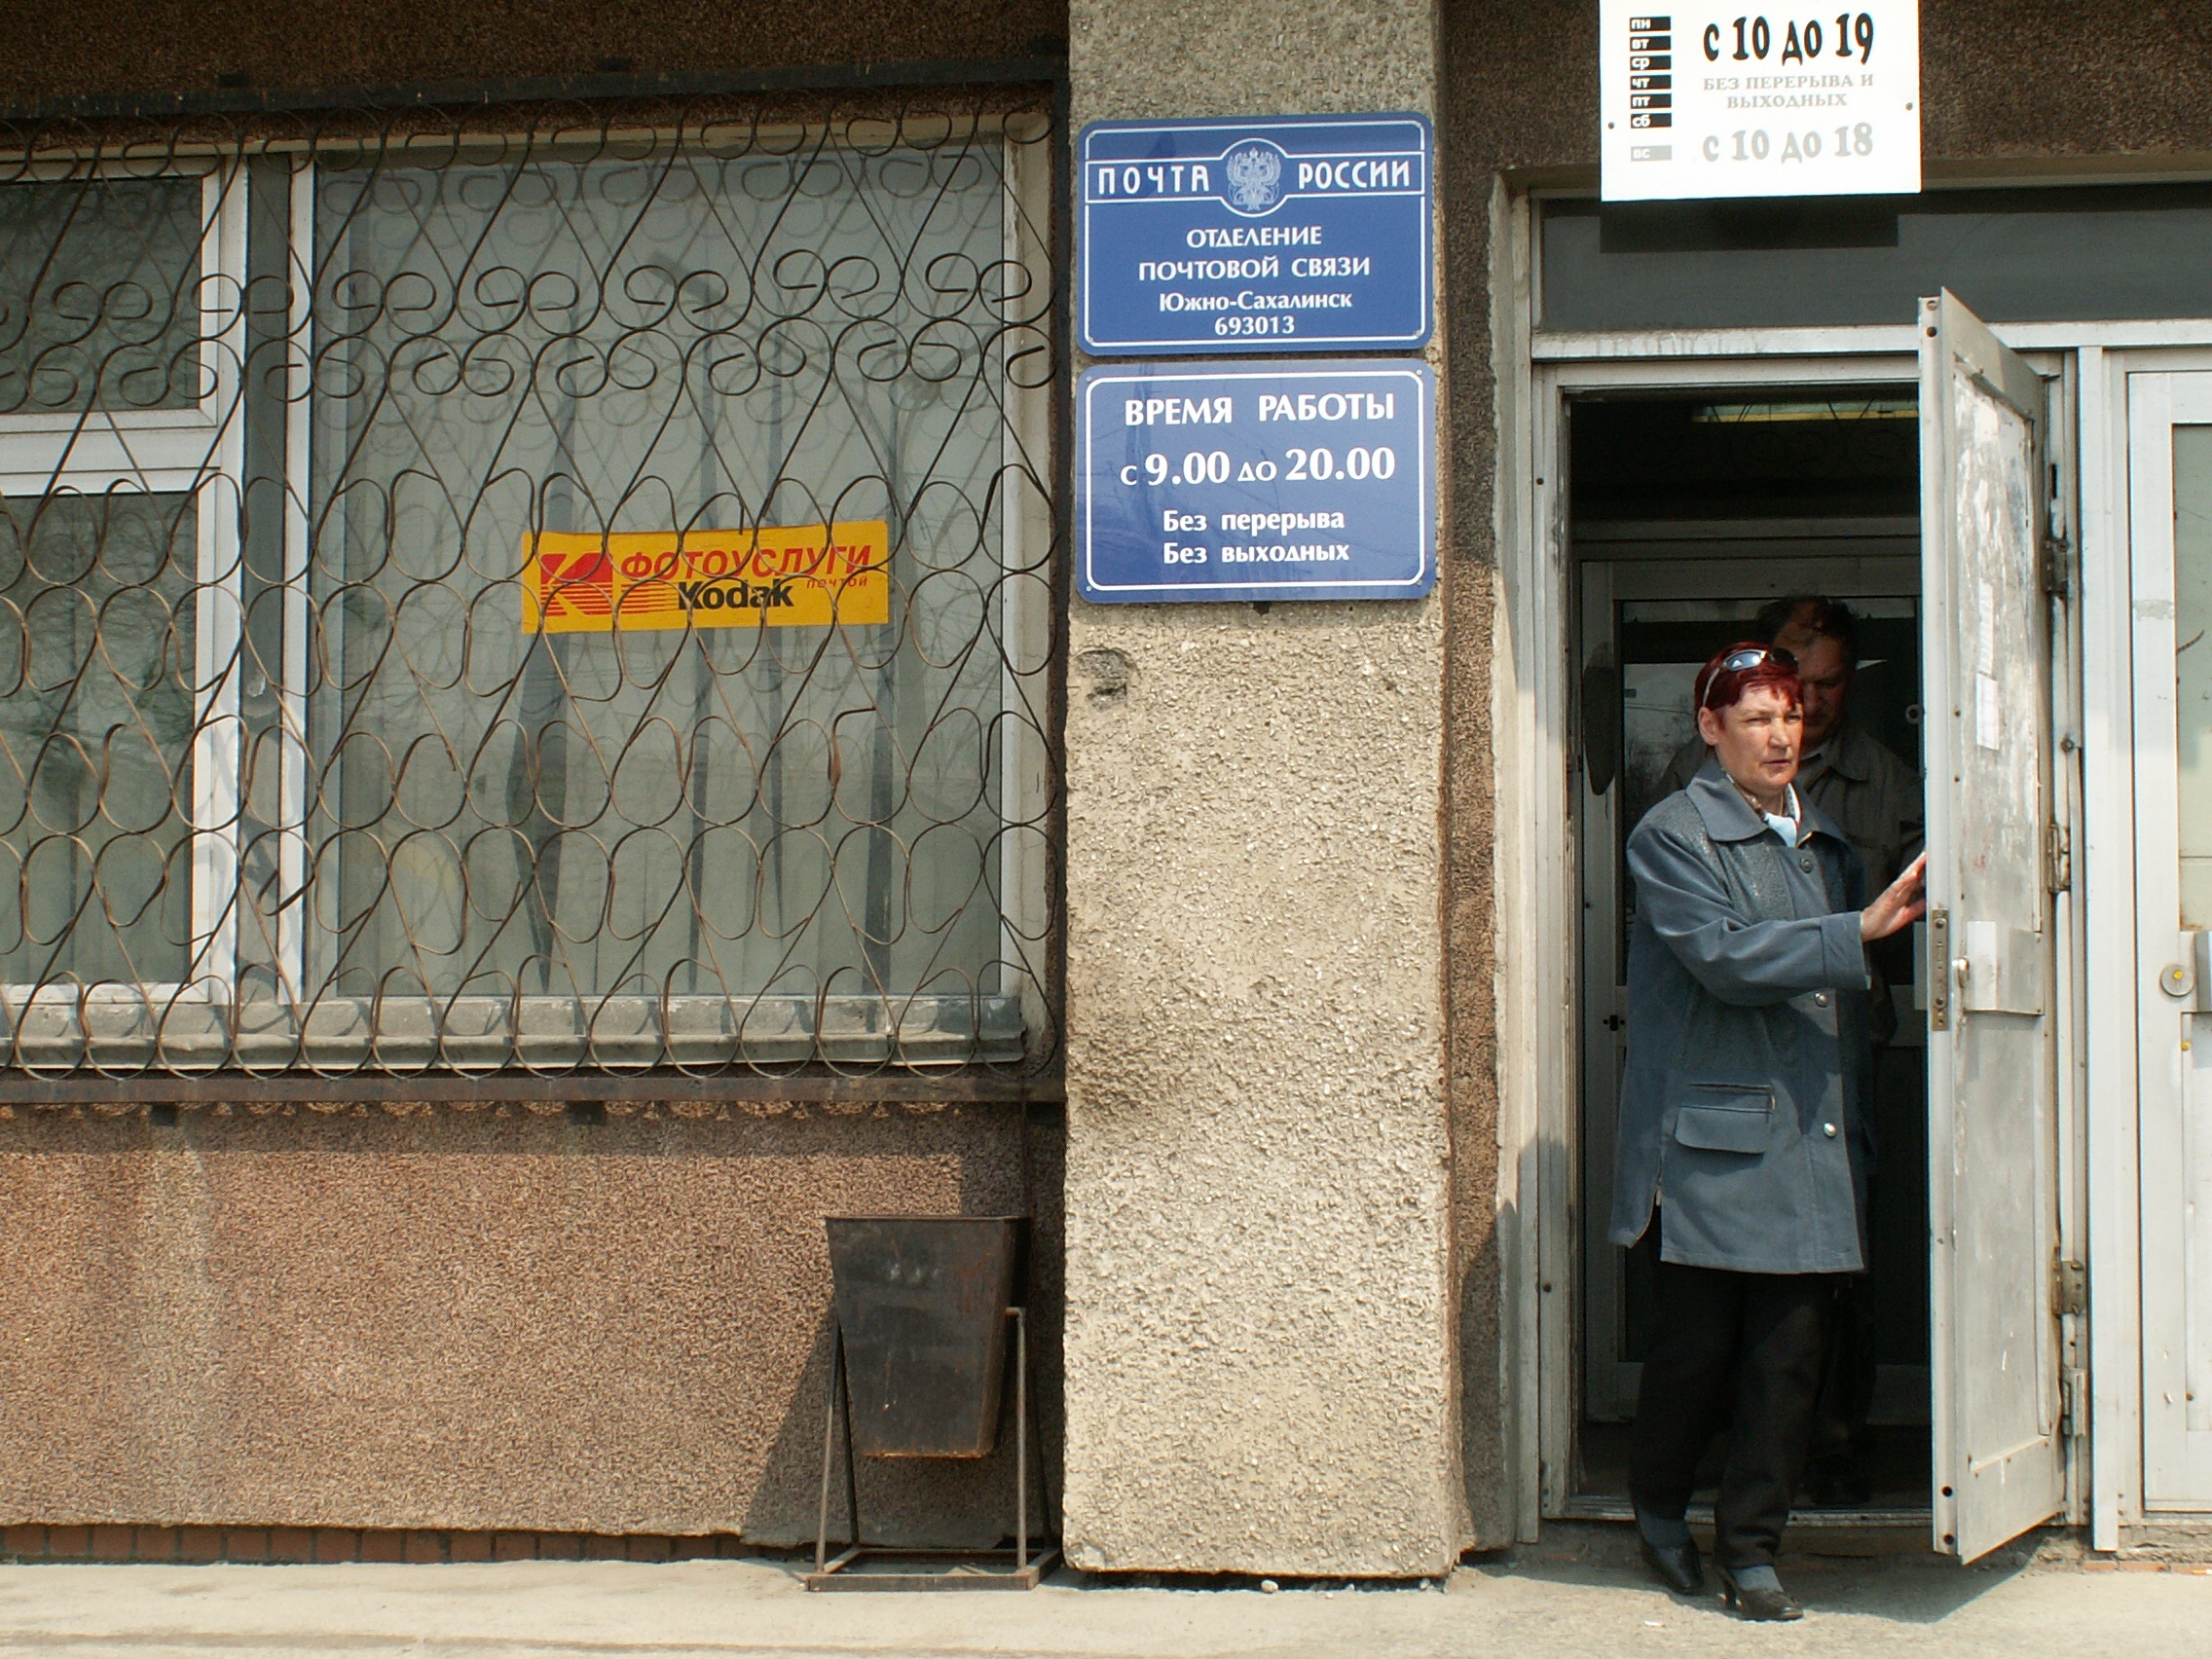 ВХОД, отделение почтовой связи 693013, Сахалинская обл., Южно-Сахалинск